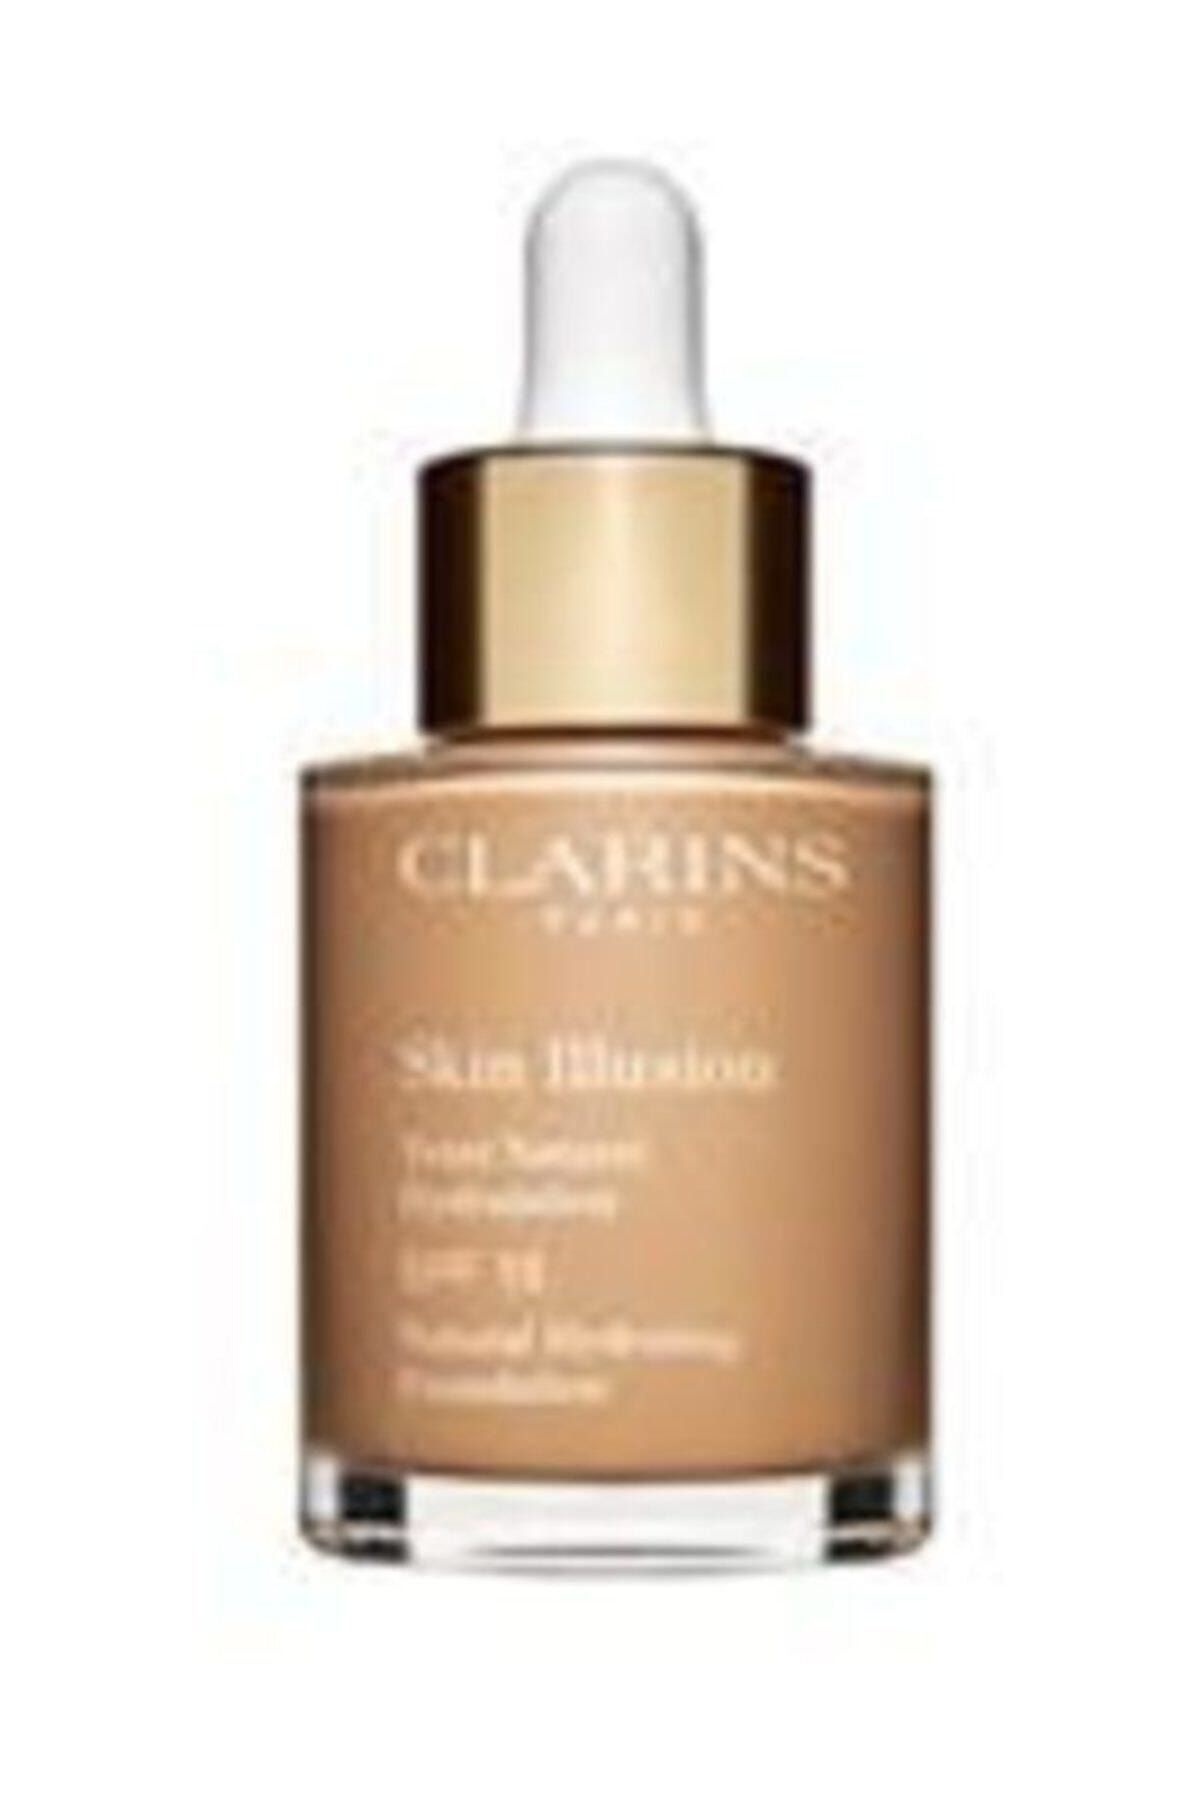 Clarins Skin Illusion Natural Serum Foundation 110 Honey